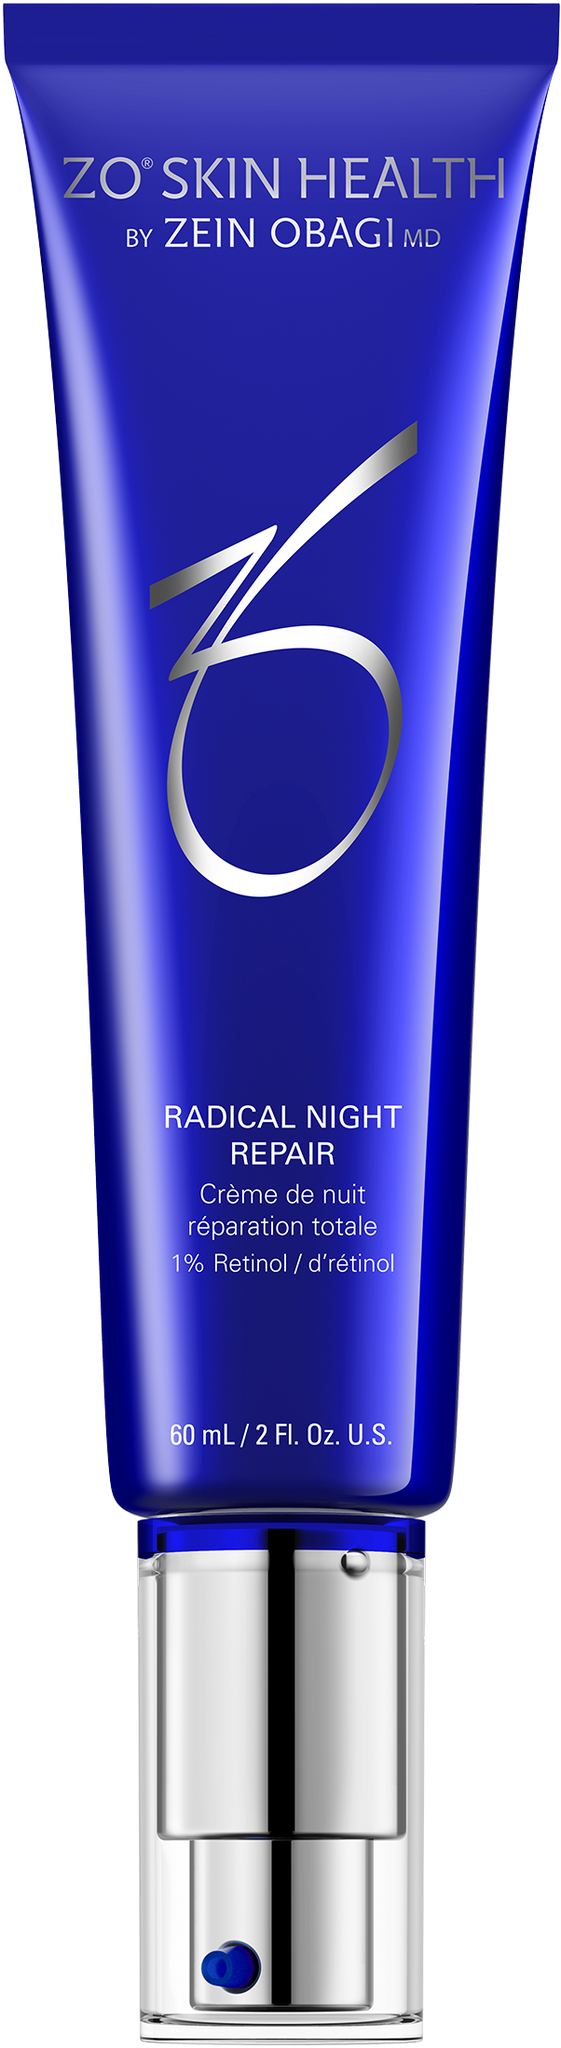 Zo Skin Health - Radical Night Repair